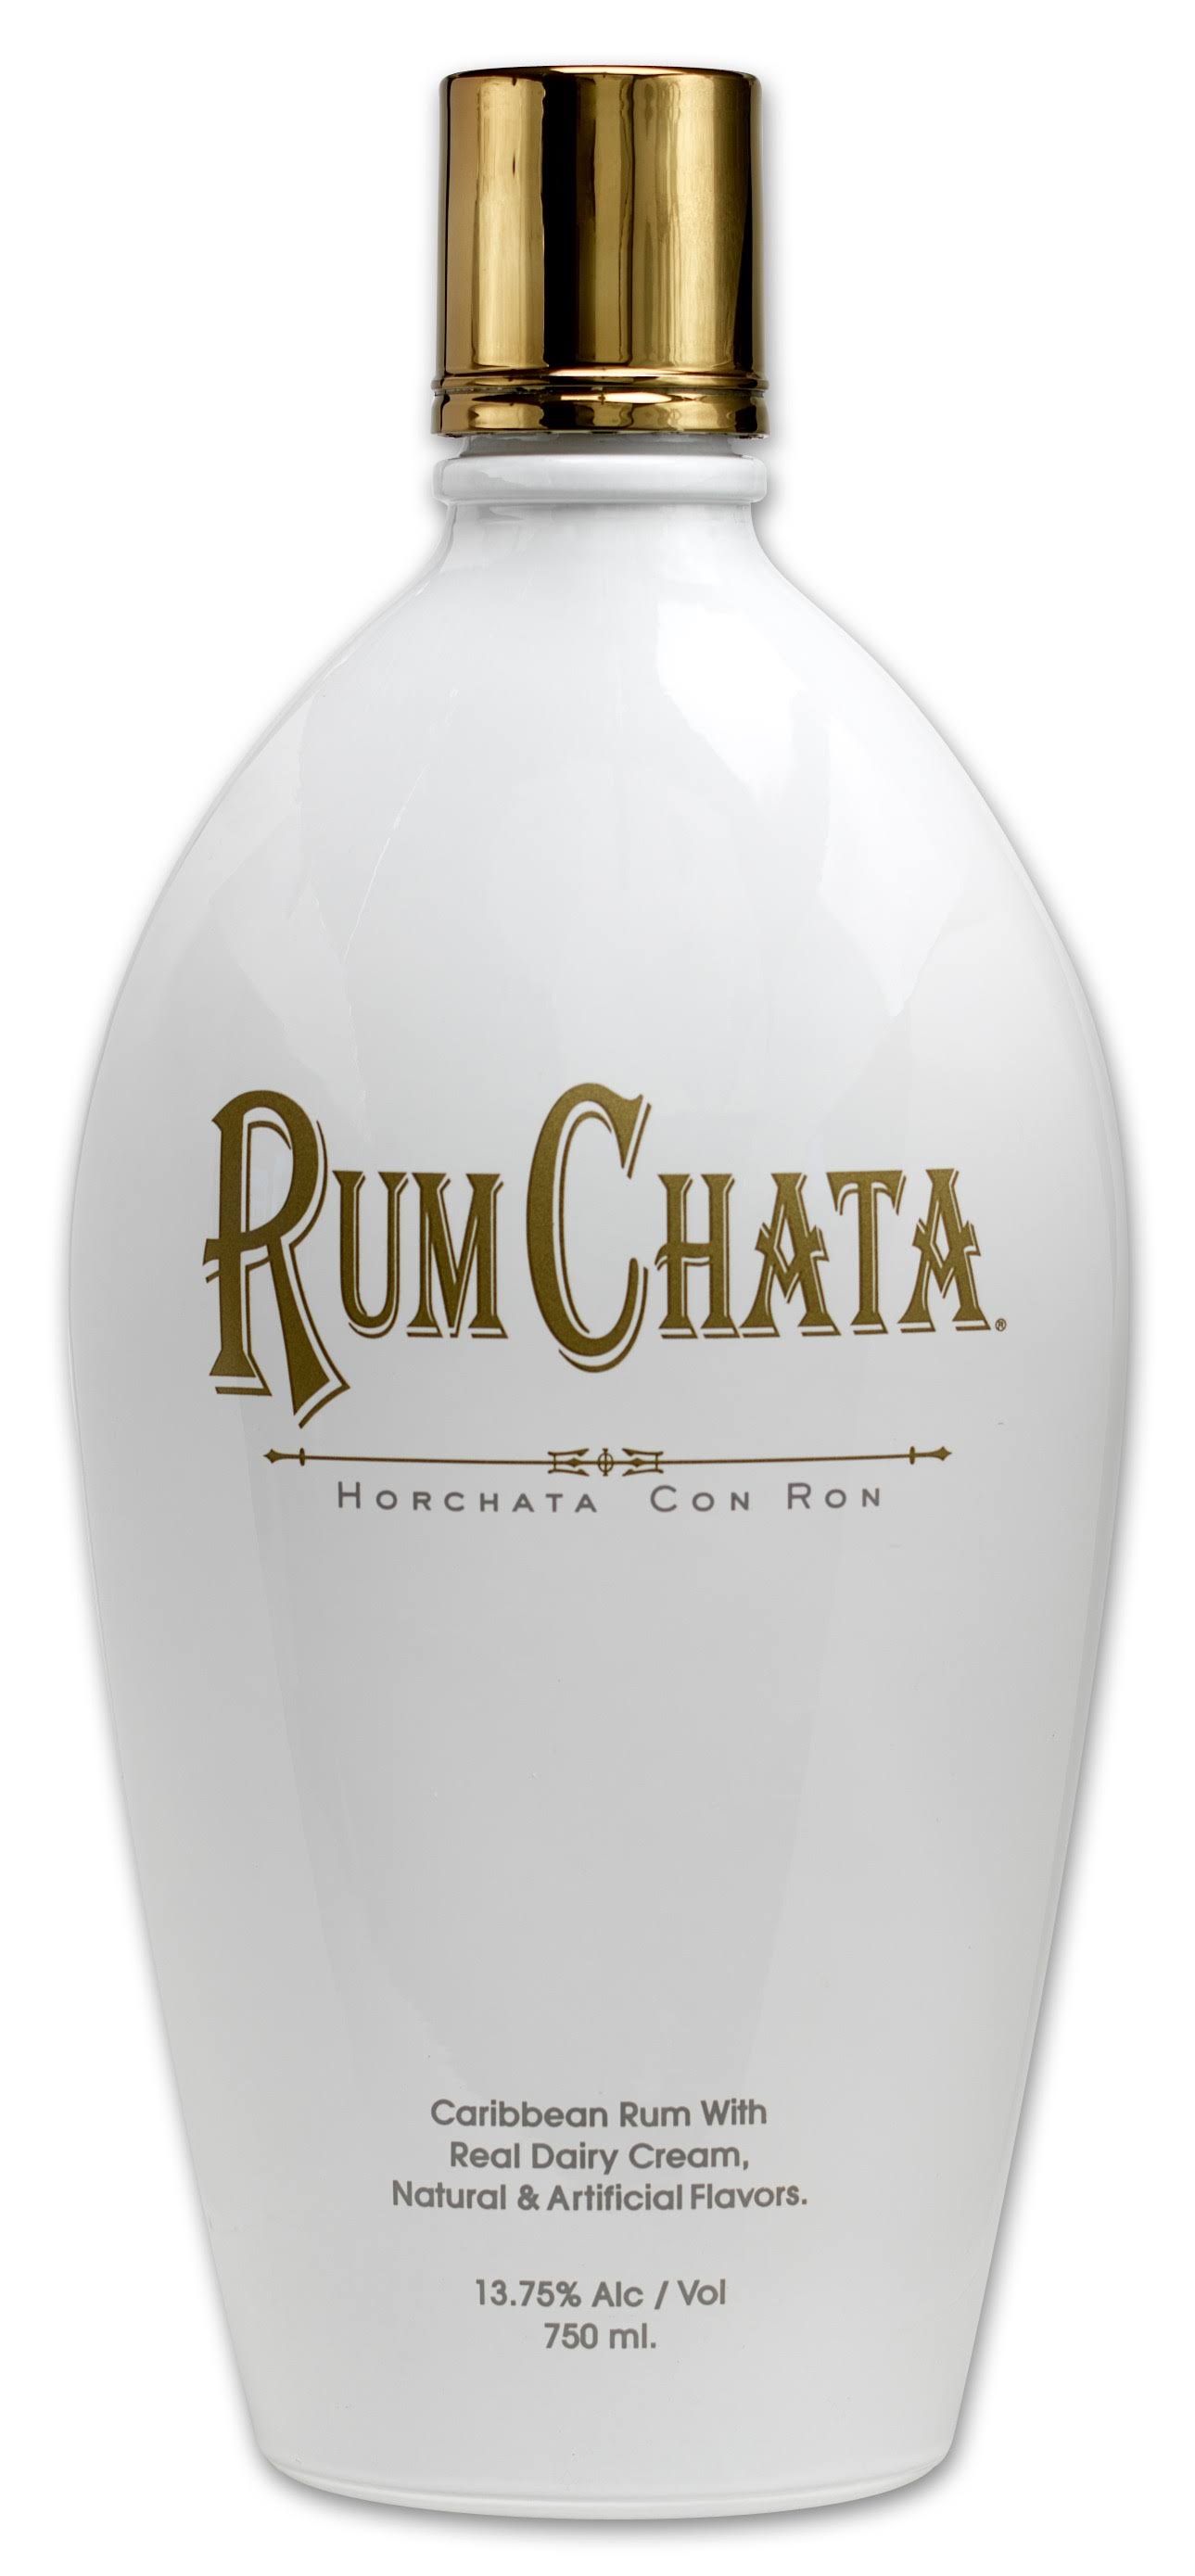 Rumchata Caribbean Rum, with Real Dairy Cream - 750 ml